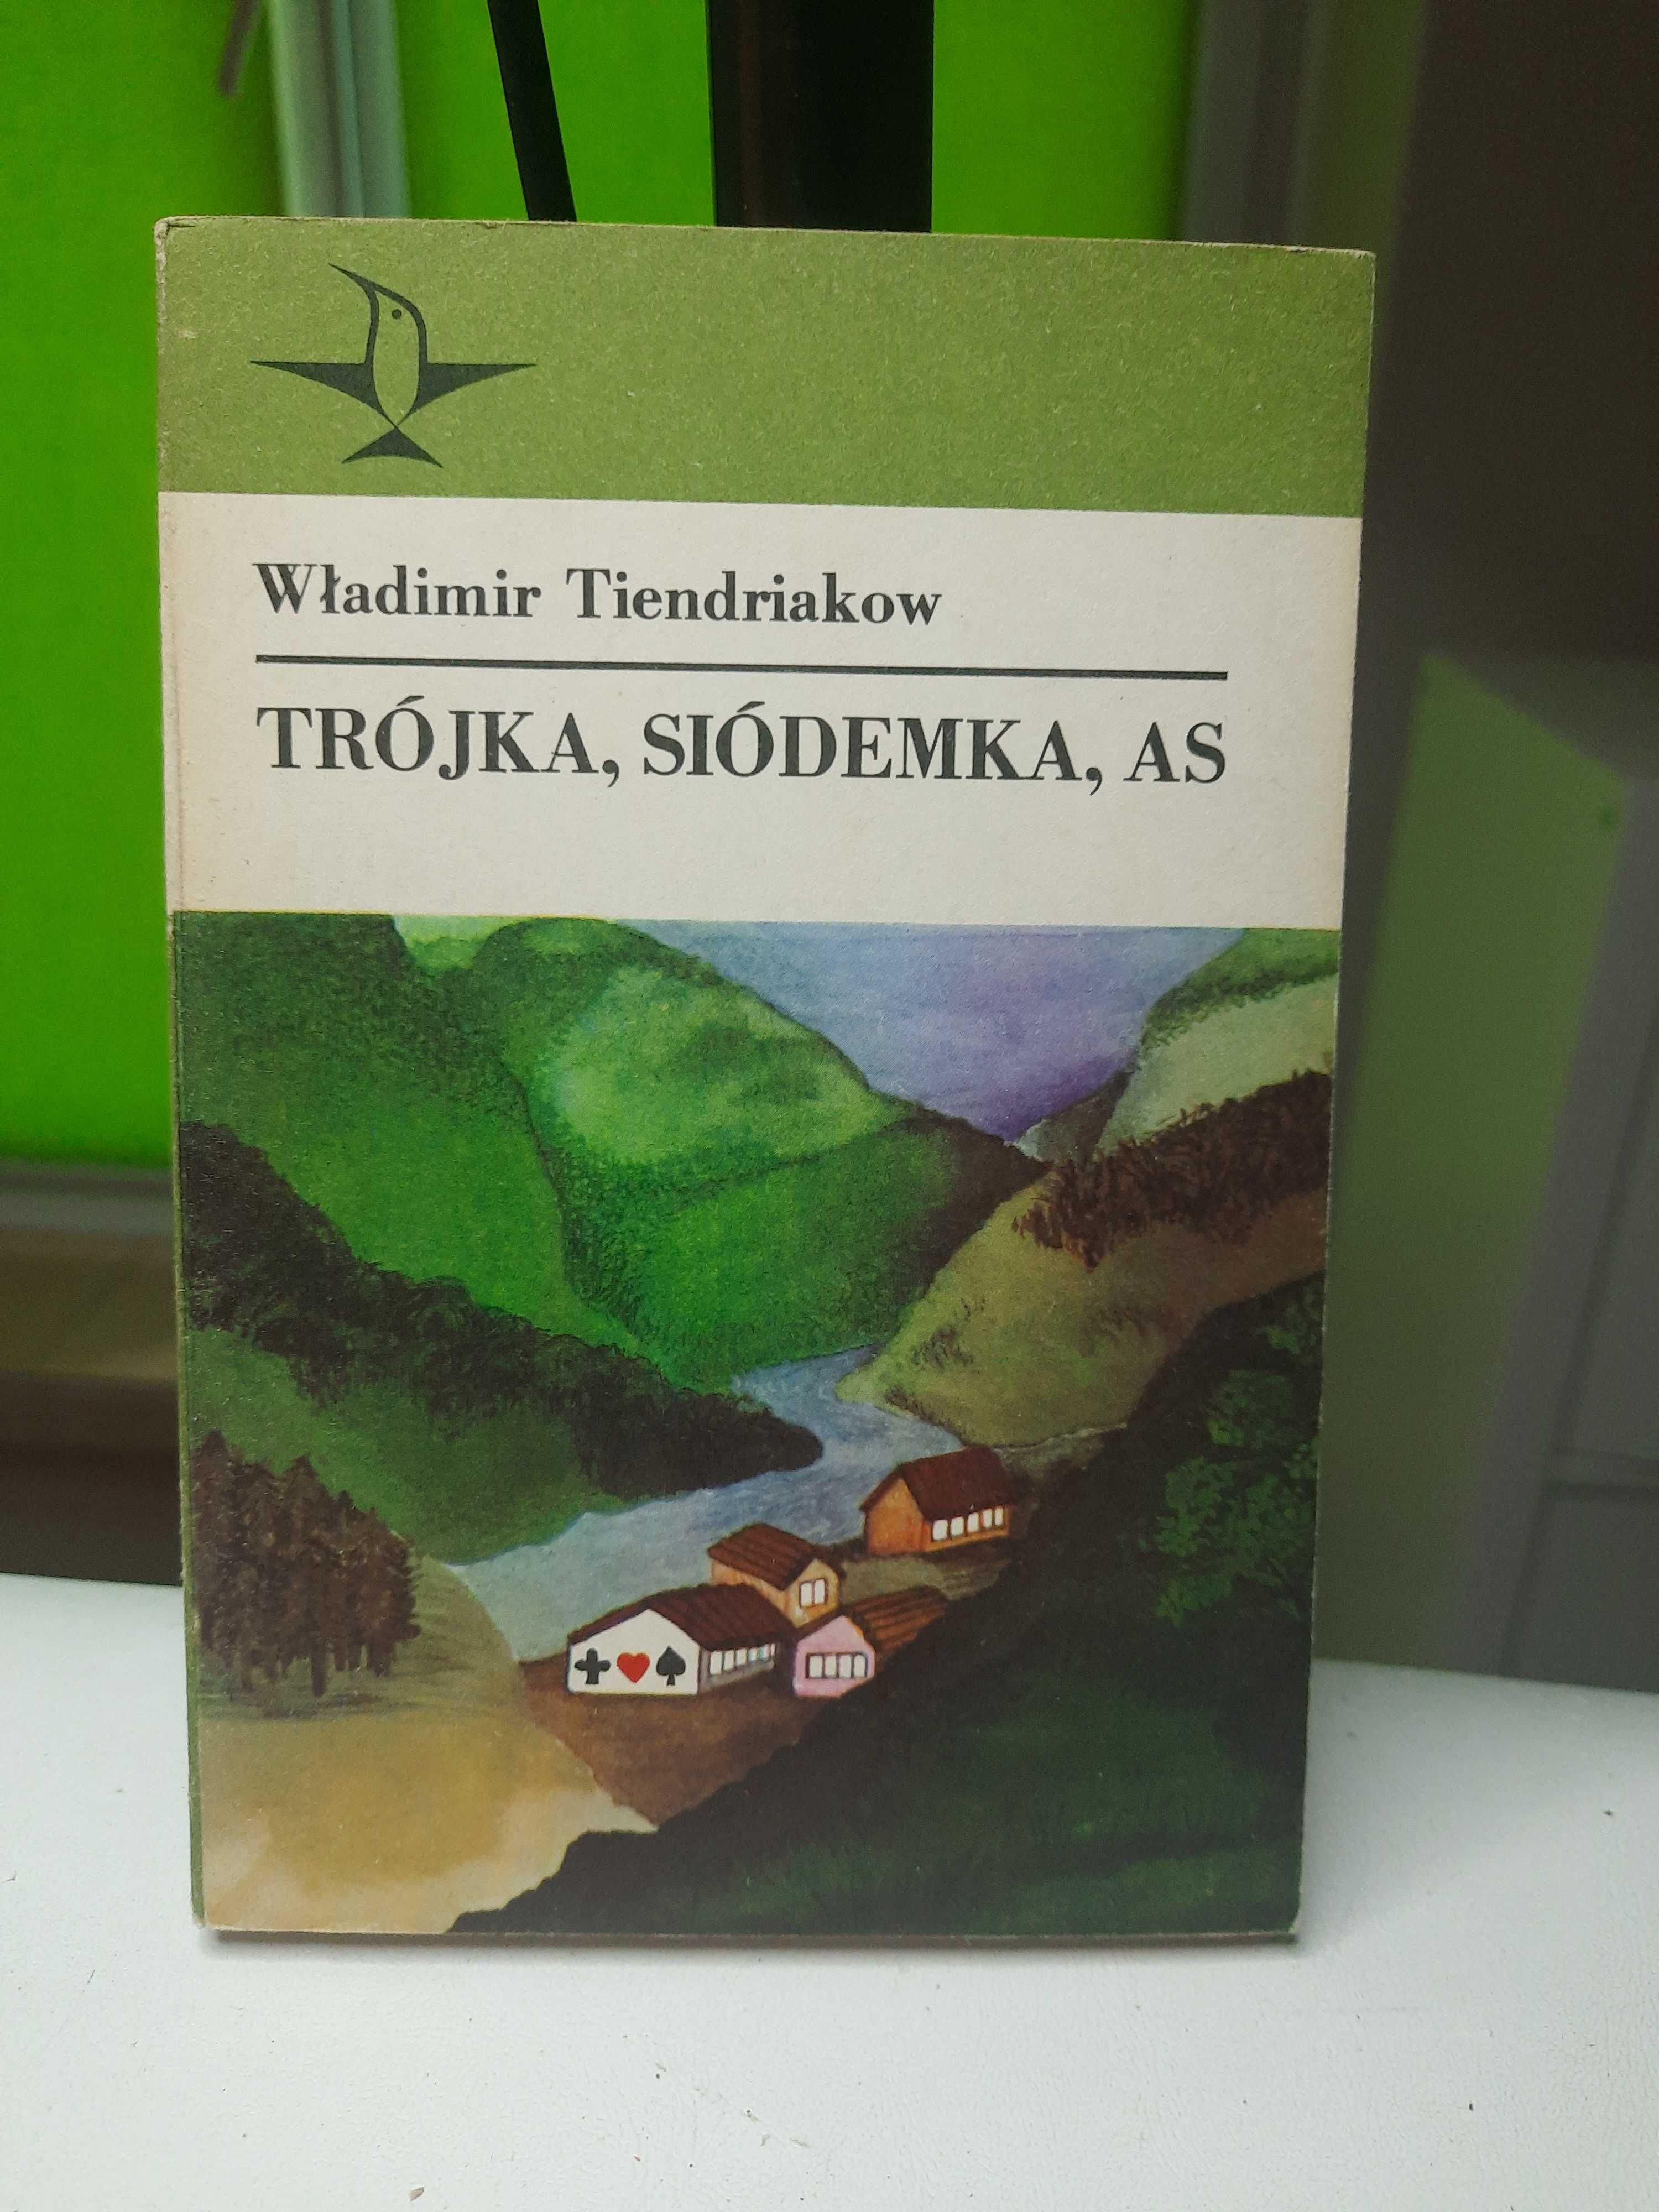 Wladimir Tiendriakow "Trójka, siódemka, as"